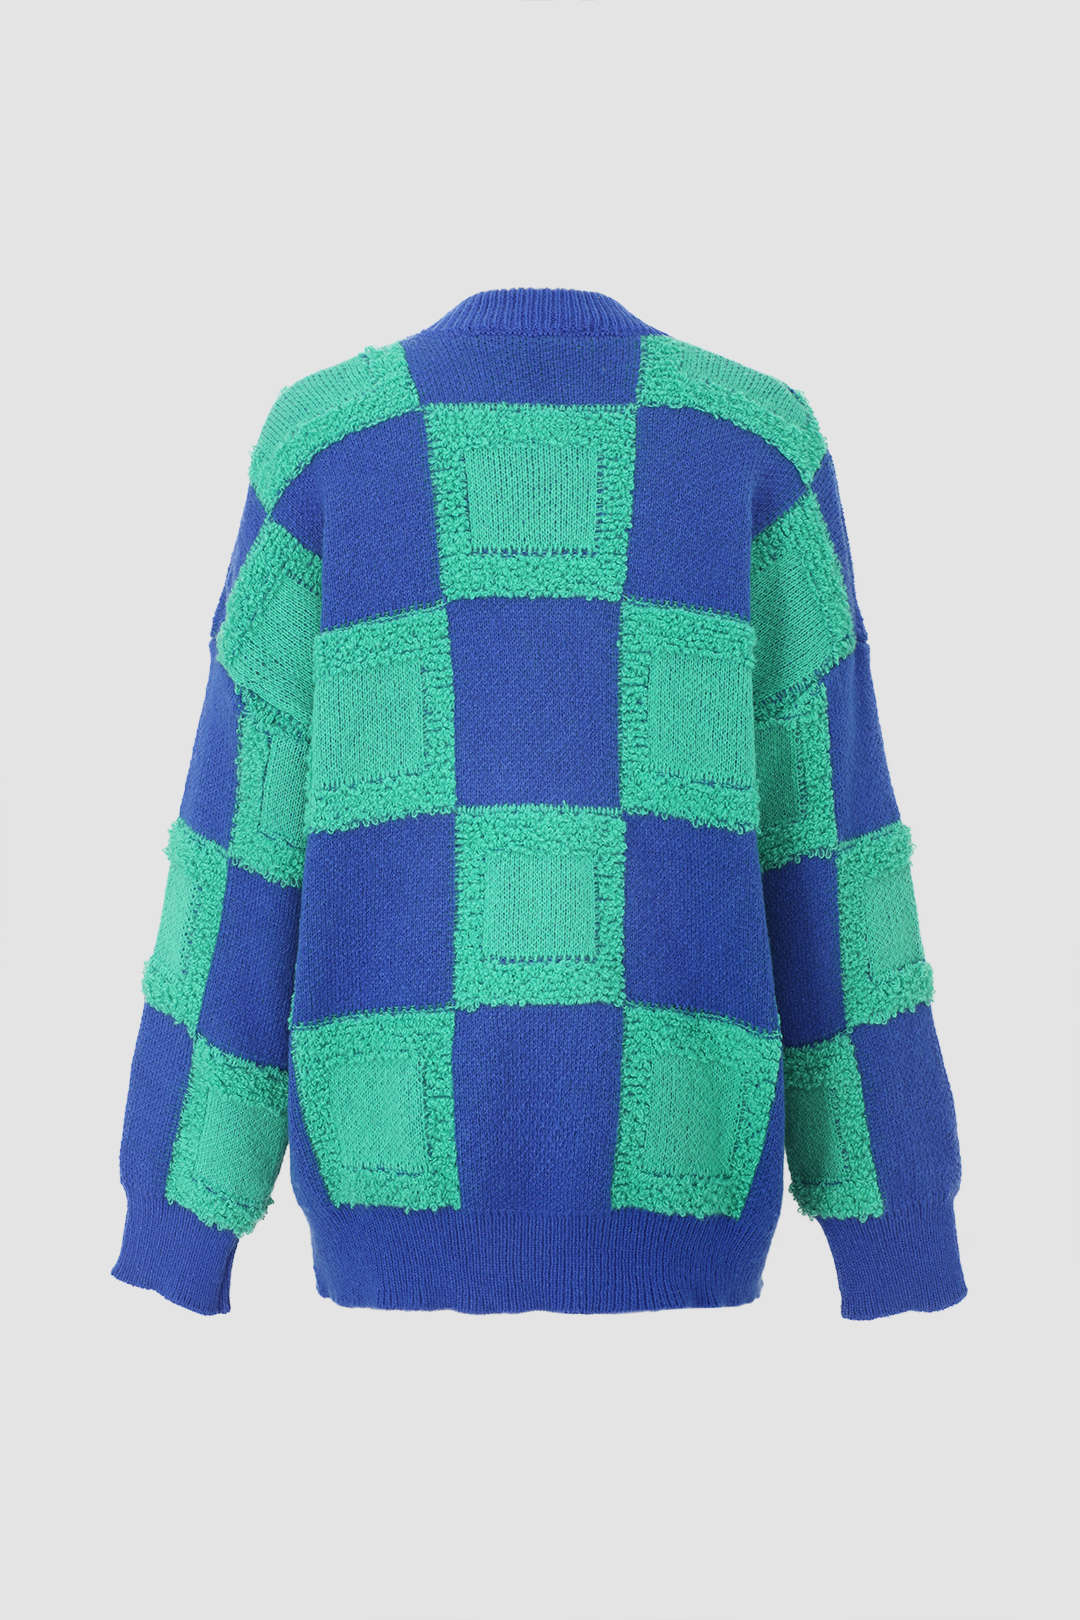 Checkered Pattern Sweater